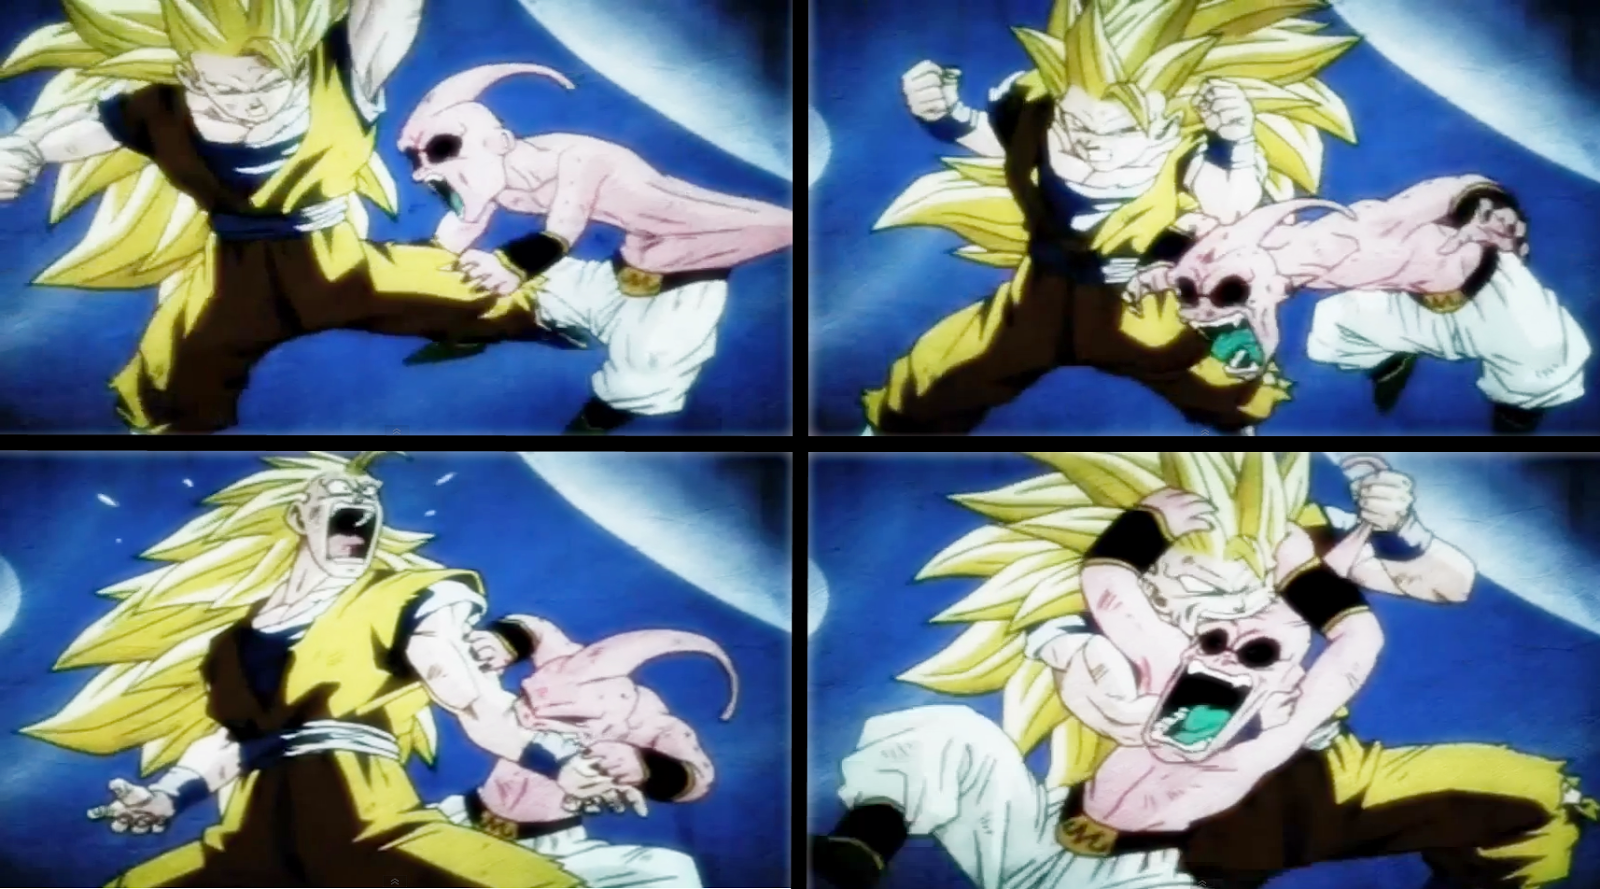 Dragon Ball Z: Goku SSJ3 vs Kid Buu - A Mordida